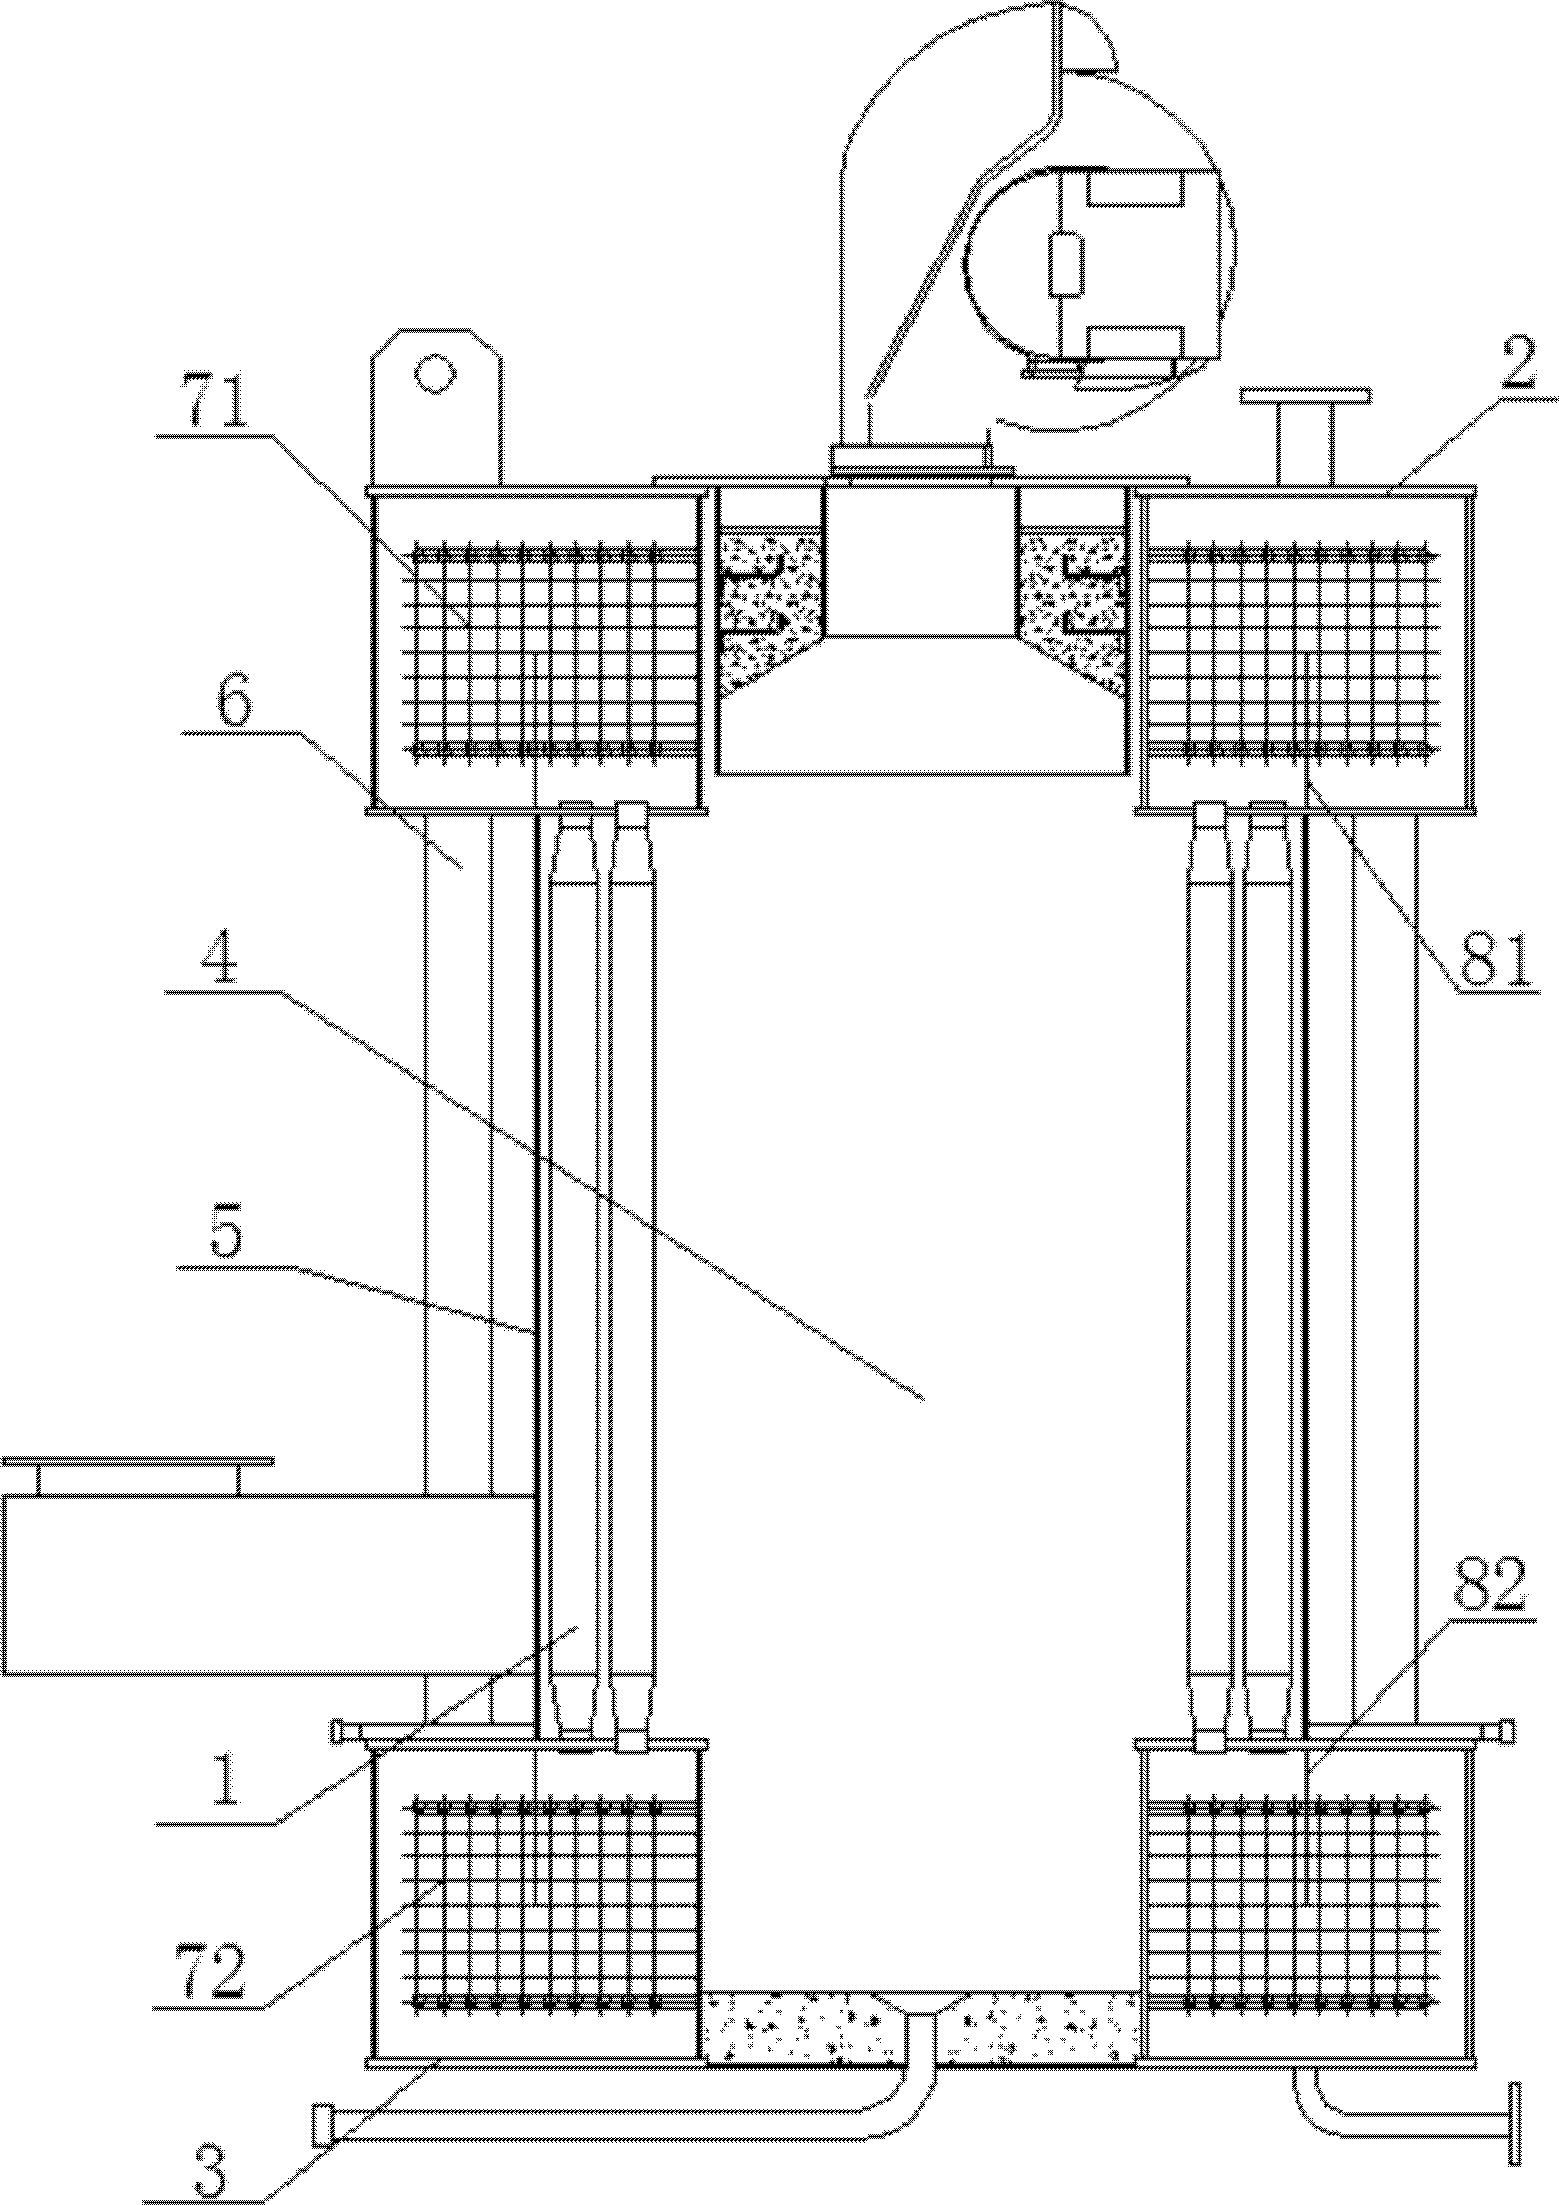 Integrated through-flow ordinary-pressure hot water boiler